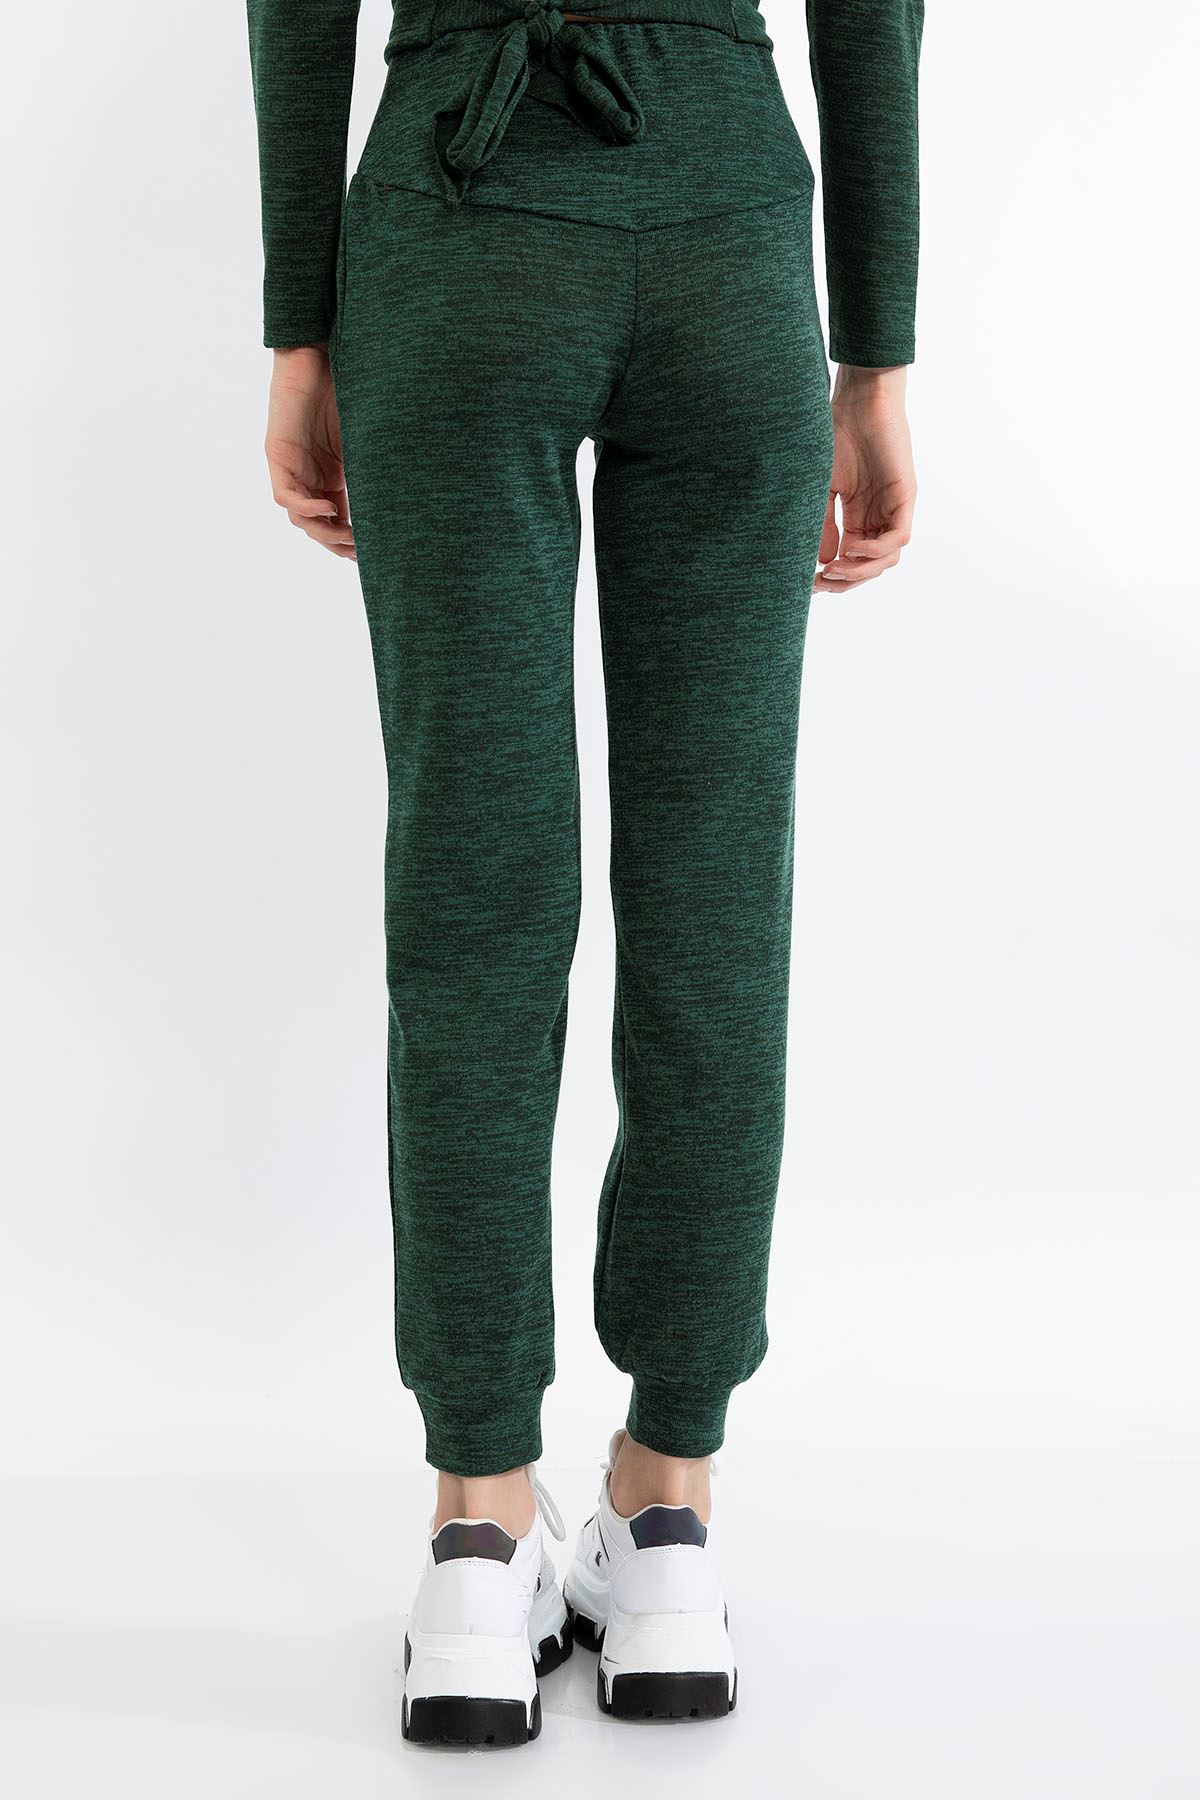 Melange Fabric Long Comfy Fit Gray Women'S Trouser - Emerald Green